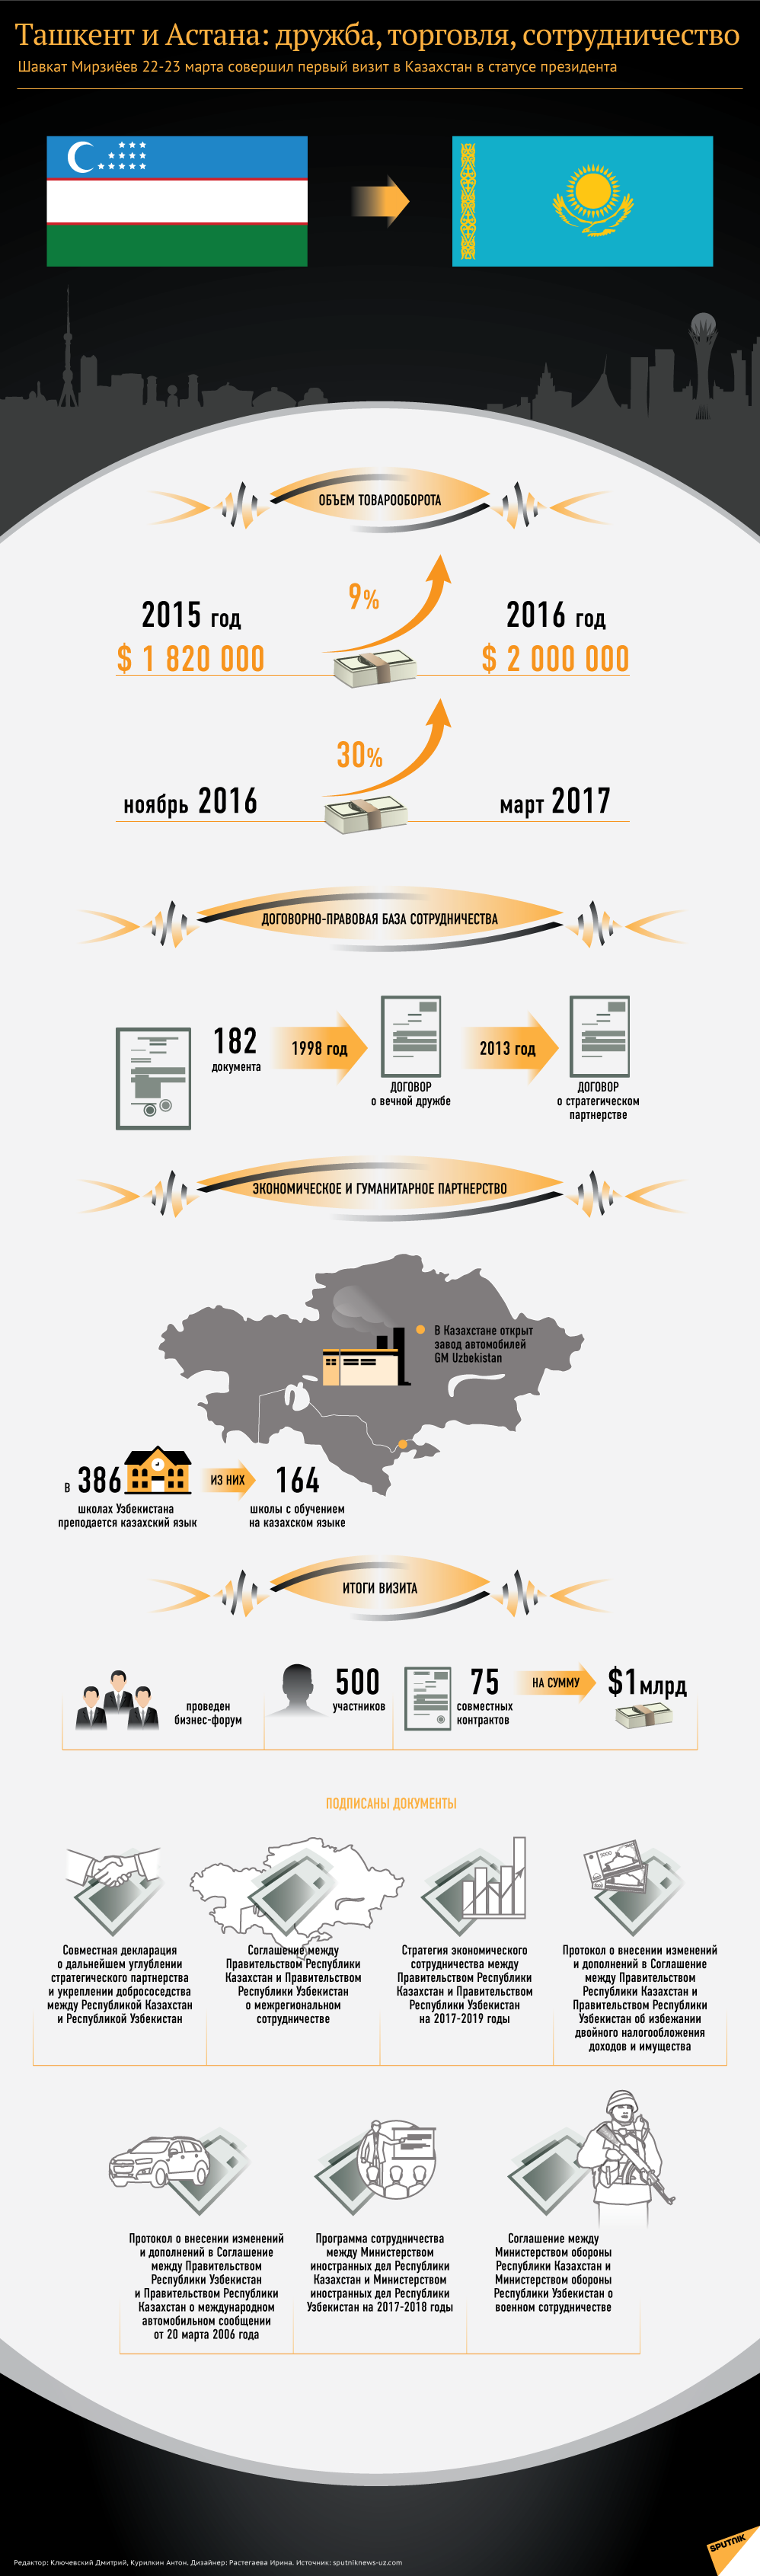 Инфографика об итогах визита президента Узбекистана в Казахстан - Sputnik Казахстан